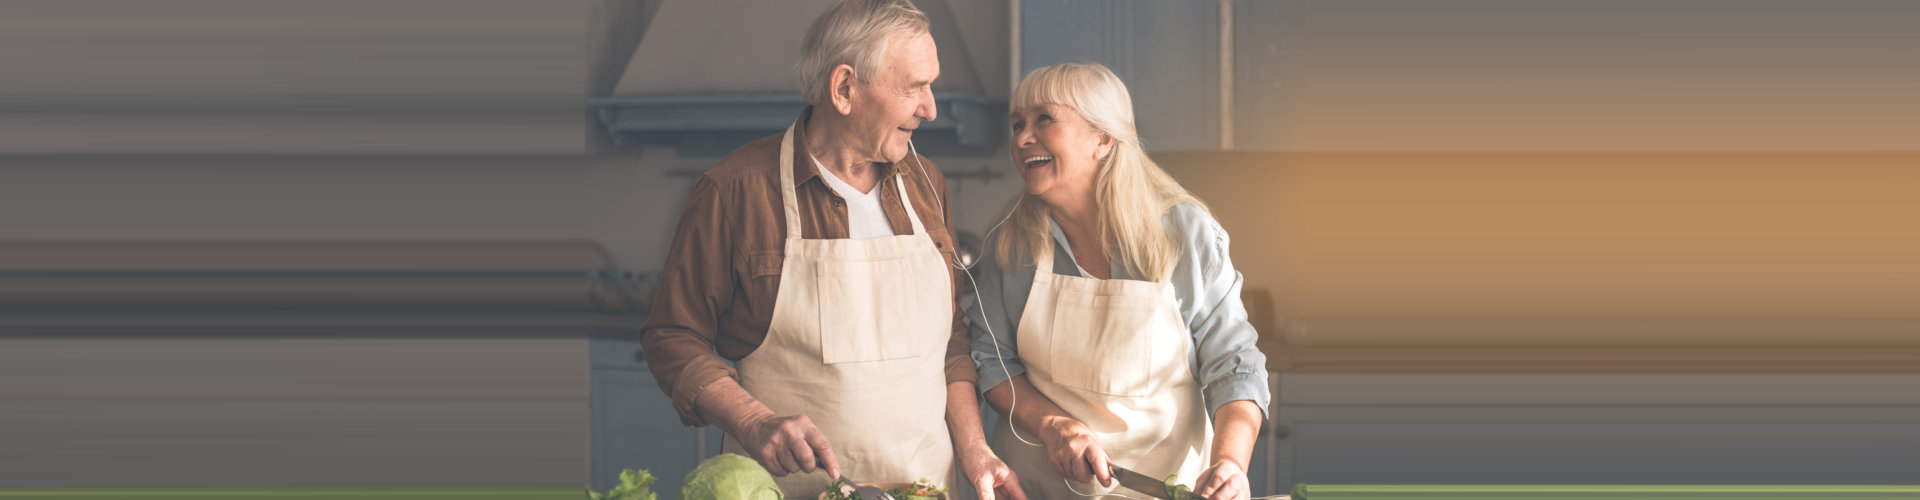 happy elderly couple preparing food